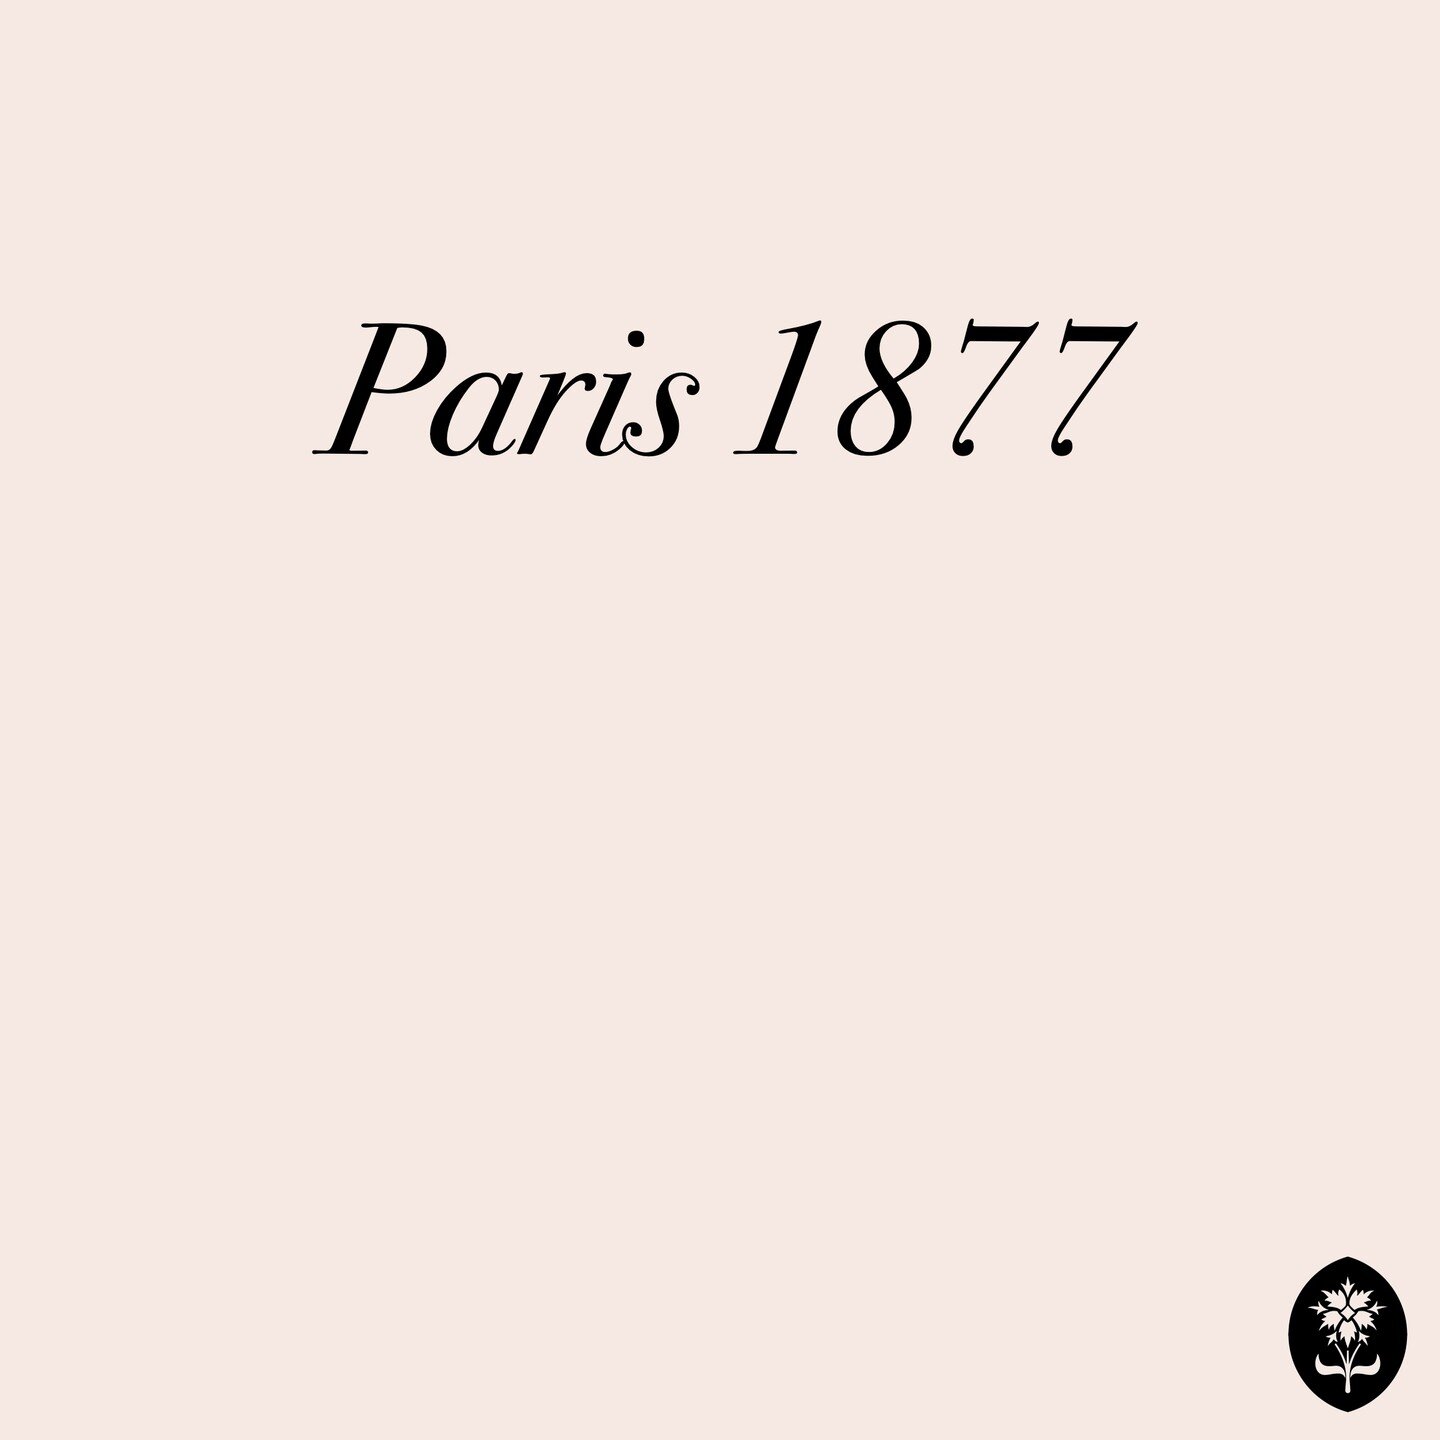 Il patrimonio.
Il futuro è radicato nella storia.

#heritage #heritagebrand #longhistory #marquehistorique #strongvalues #timeless #skincare #luxurycosmetics #madeinfrance #frenchluxury #trueluxury #since1877 #1877 #paris #🇫🇷